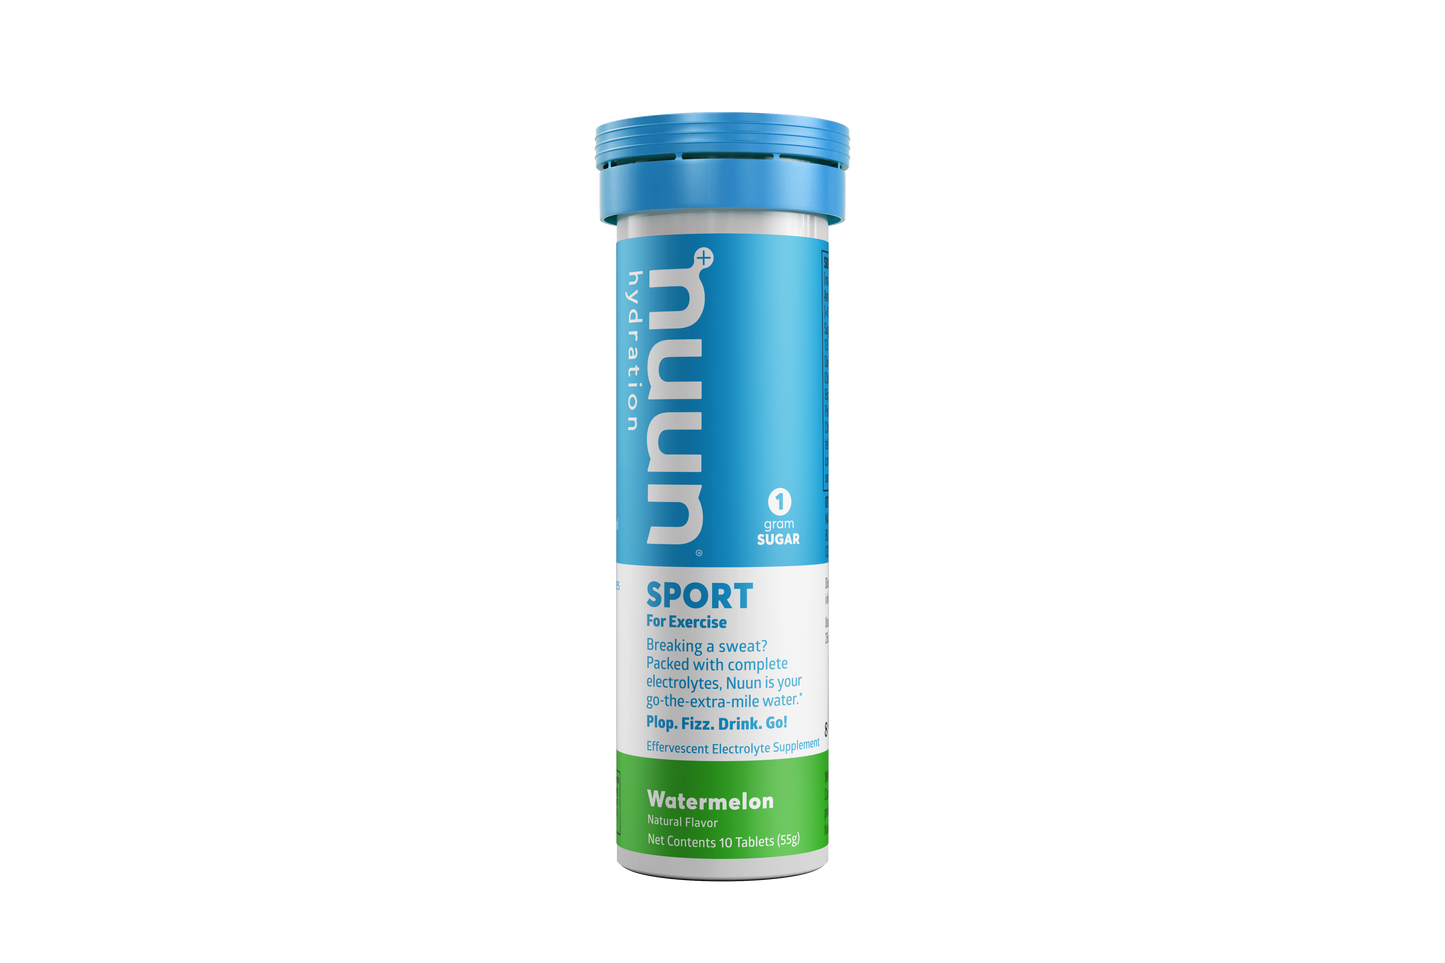 Nuun Sport Mix (sin cafeína)